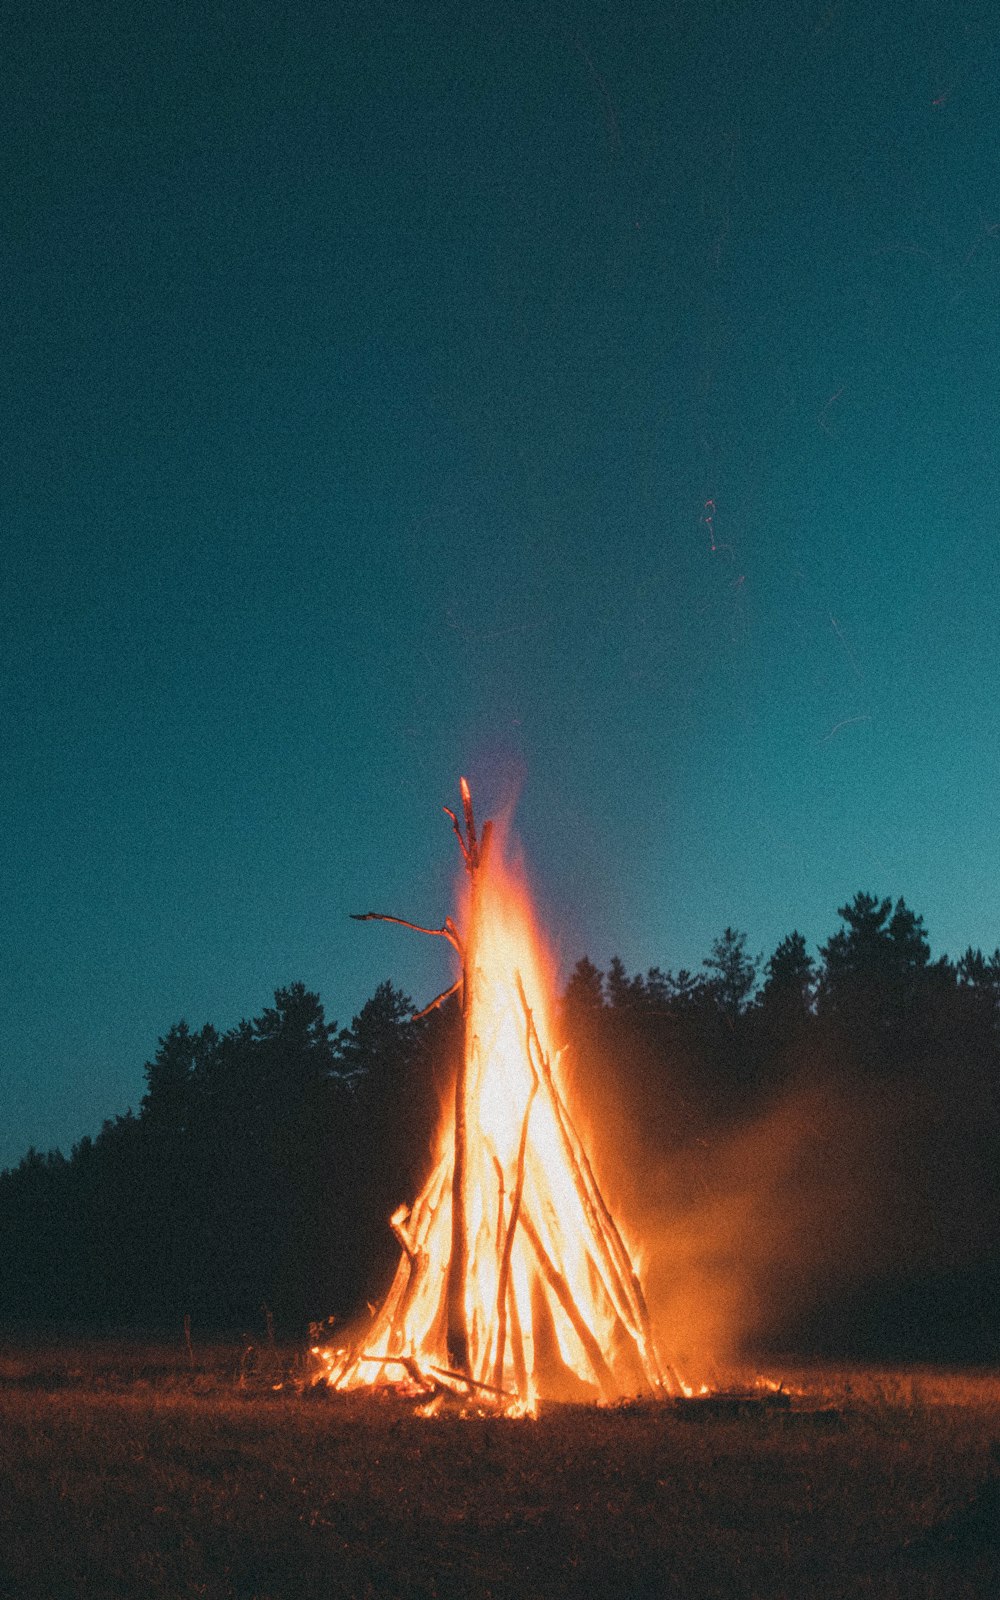 bonfire under blue sky during nighttime